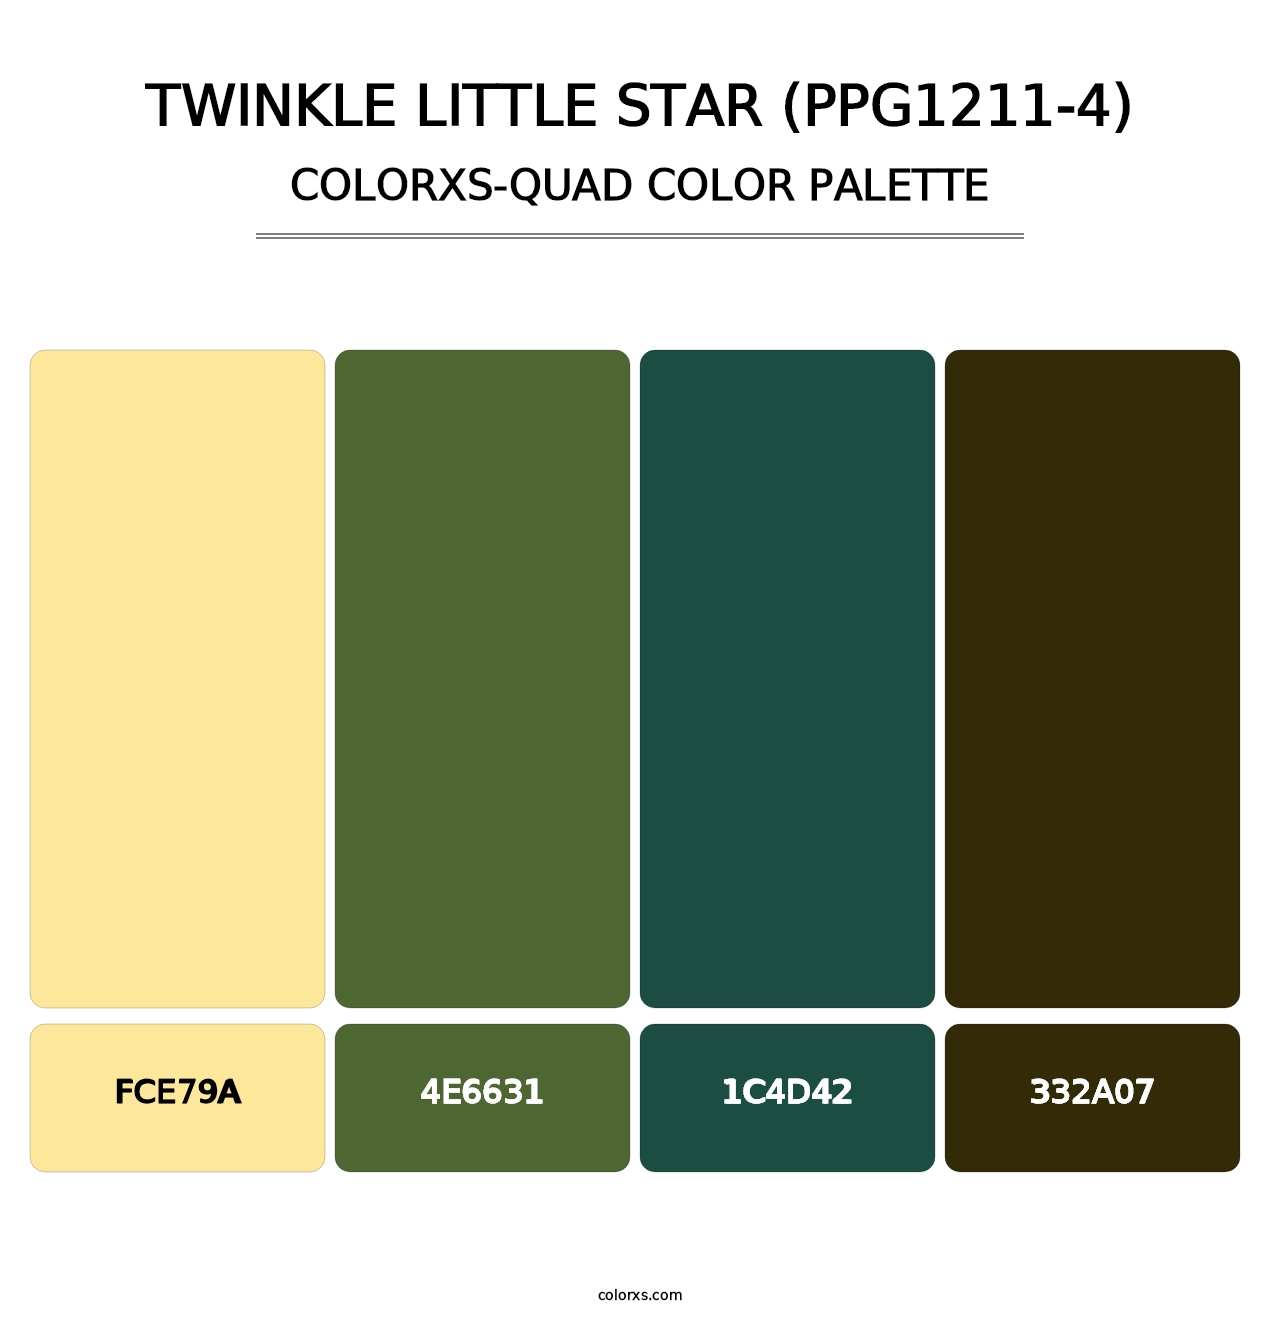 Twinkle Little Star (PPG1211-4) - Colorxs Quad Palette